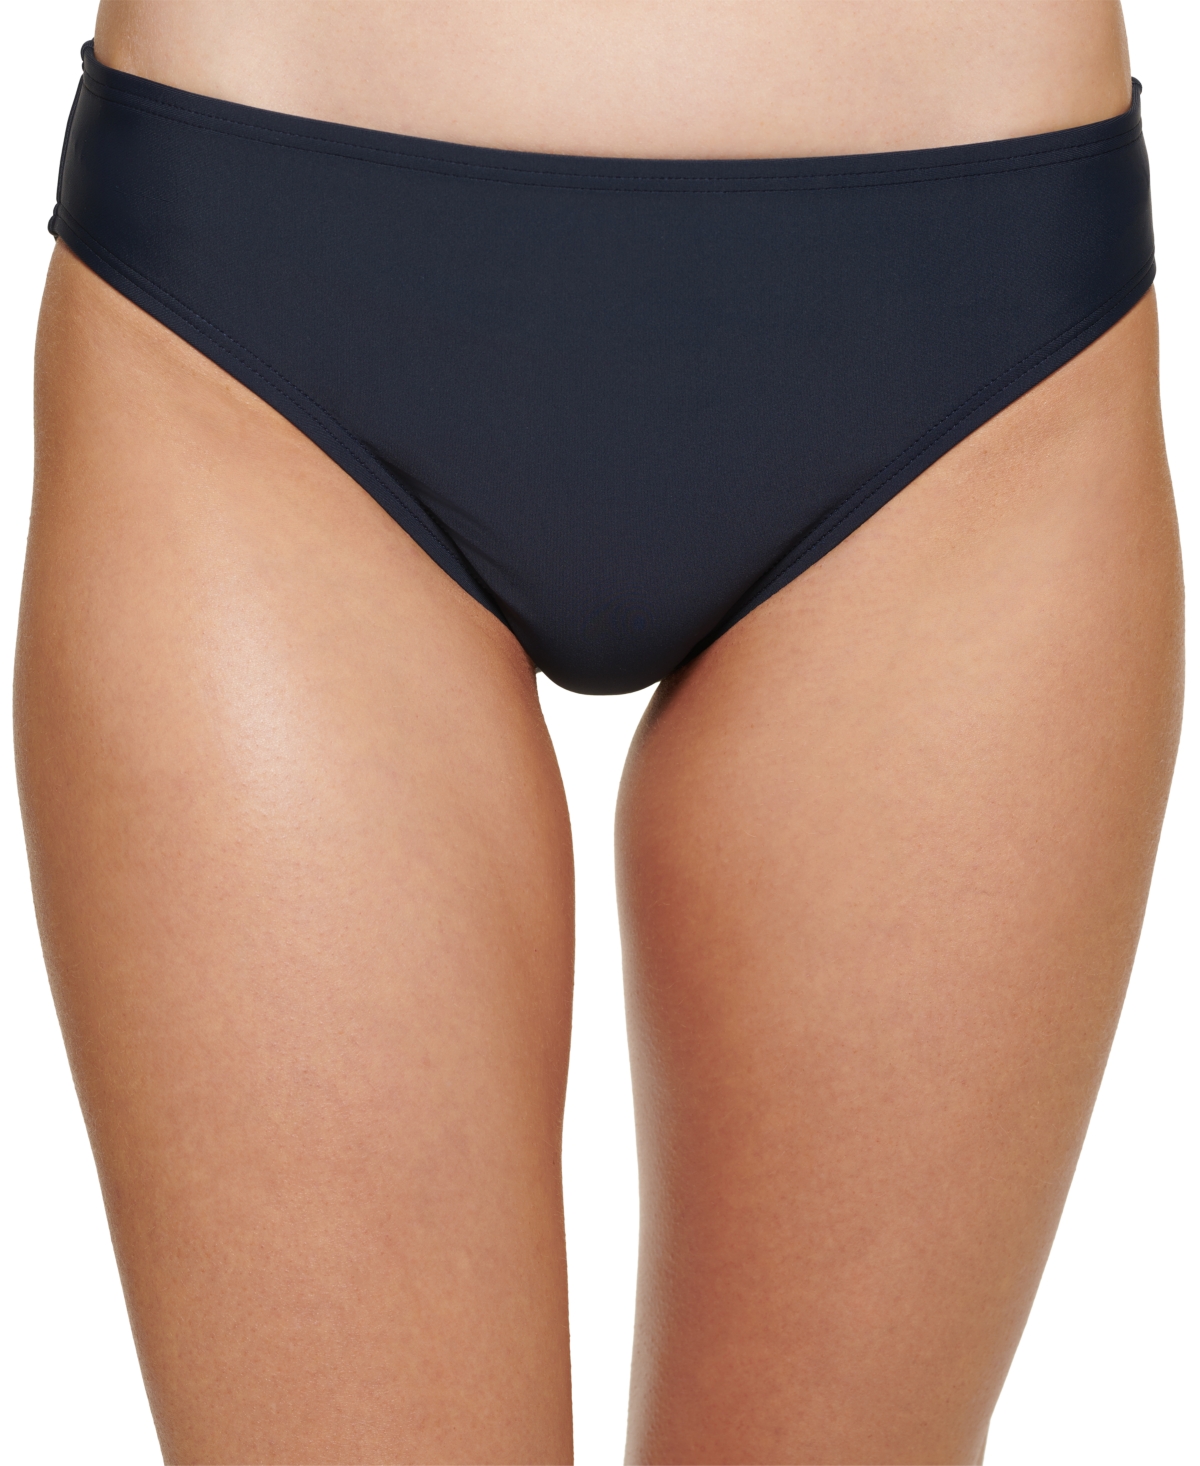 Tommy Hilfiger Classic Bikini Bottoms Women's Swimsuit